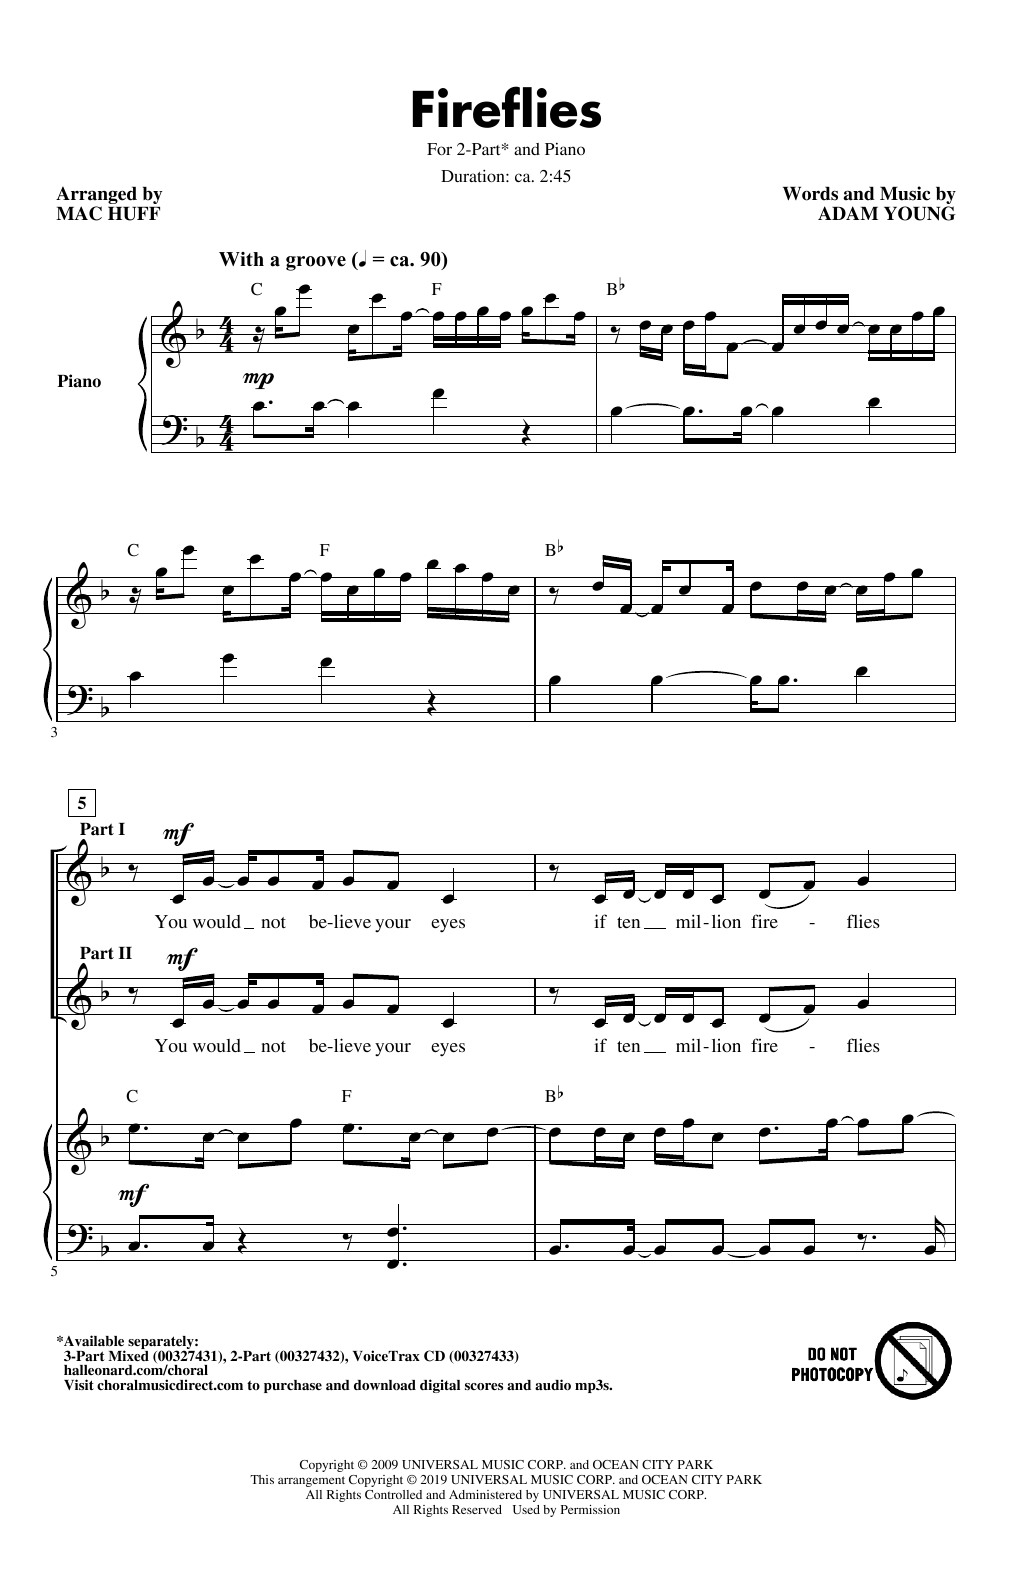 Owl City "Fireflies Mac Huff)" Music PDF Notes, Chords Score 2-Part Choir Download Printable. SKU: 431137